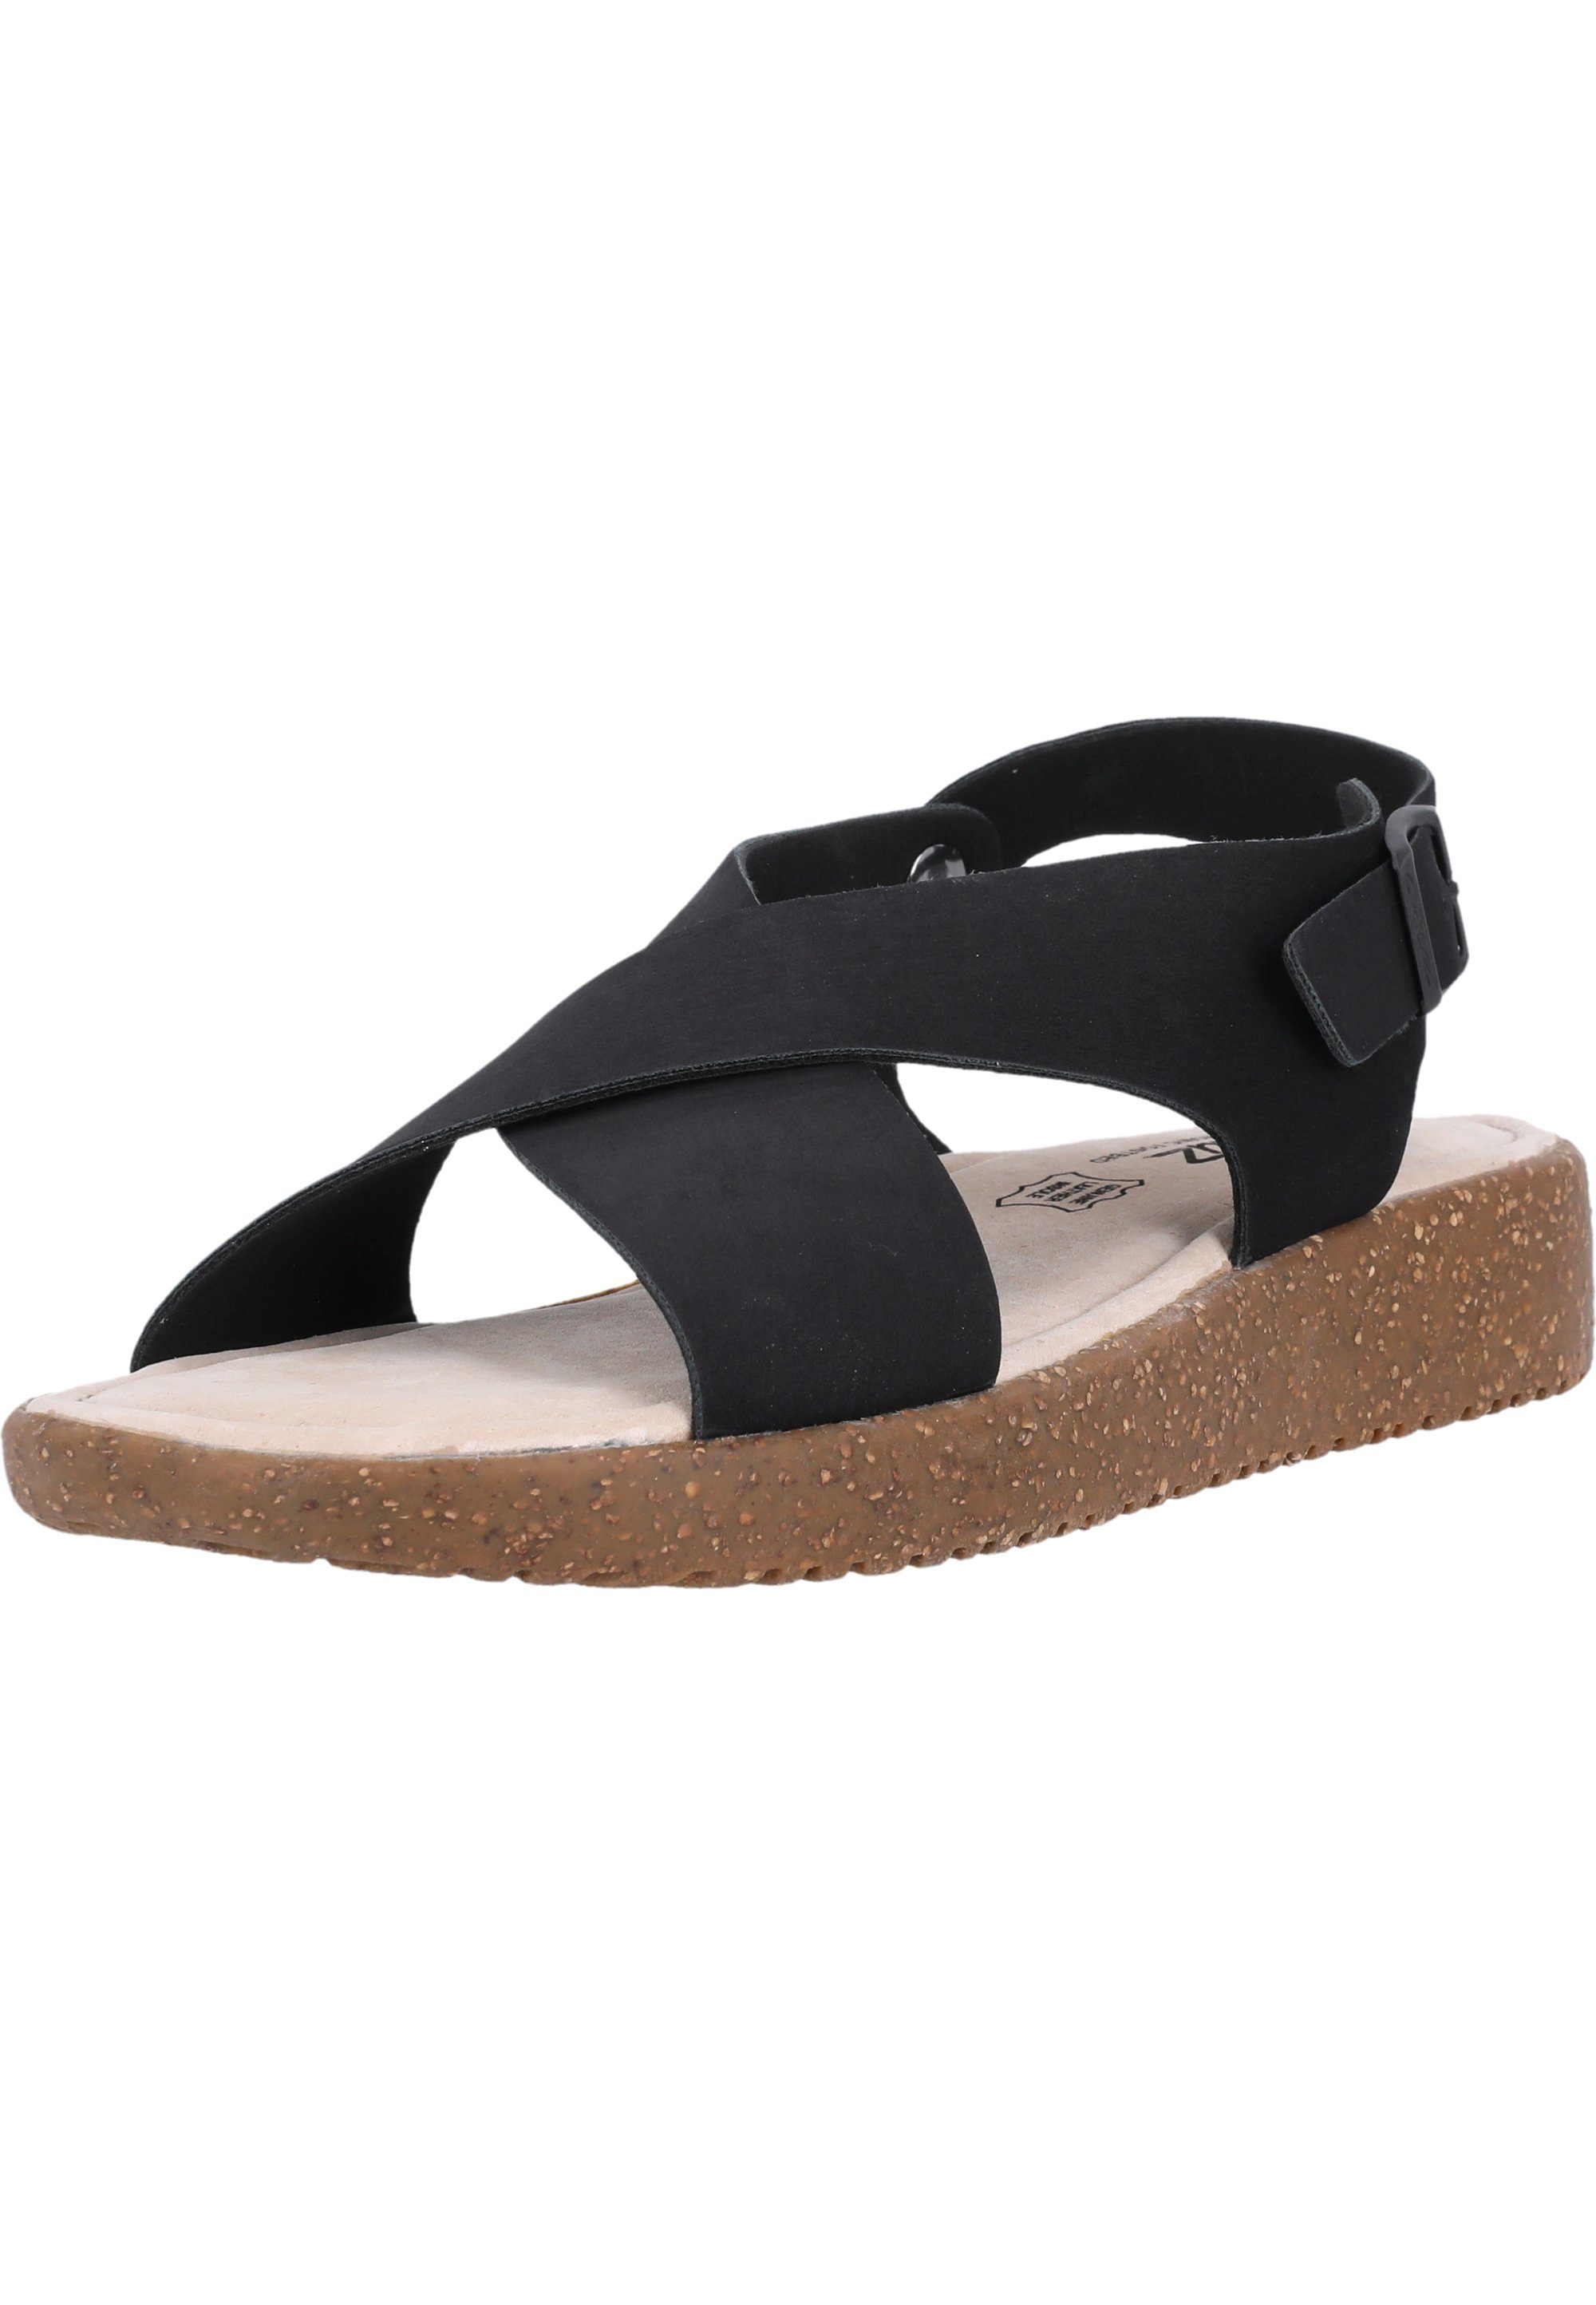 CRUZ Bellevira Sandale mit extra komfortablem Fußbett | Riemchensandalen